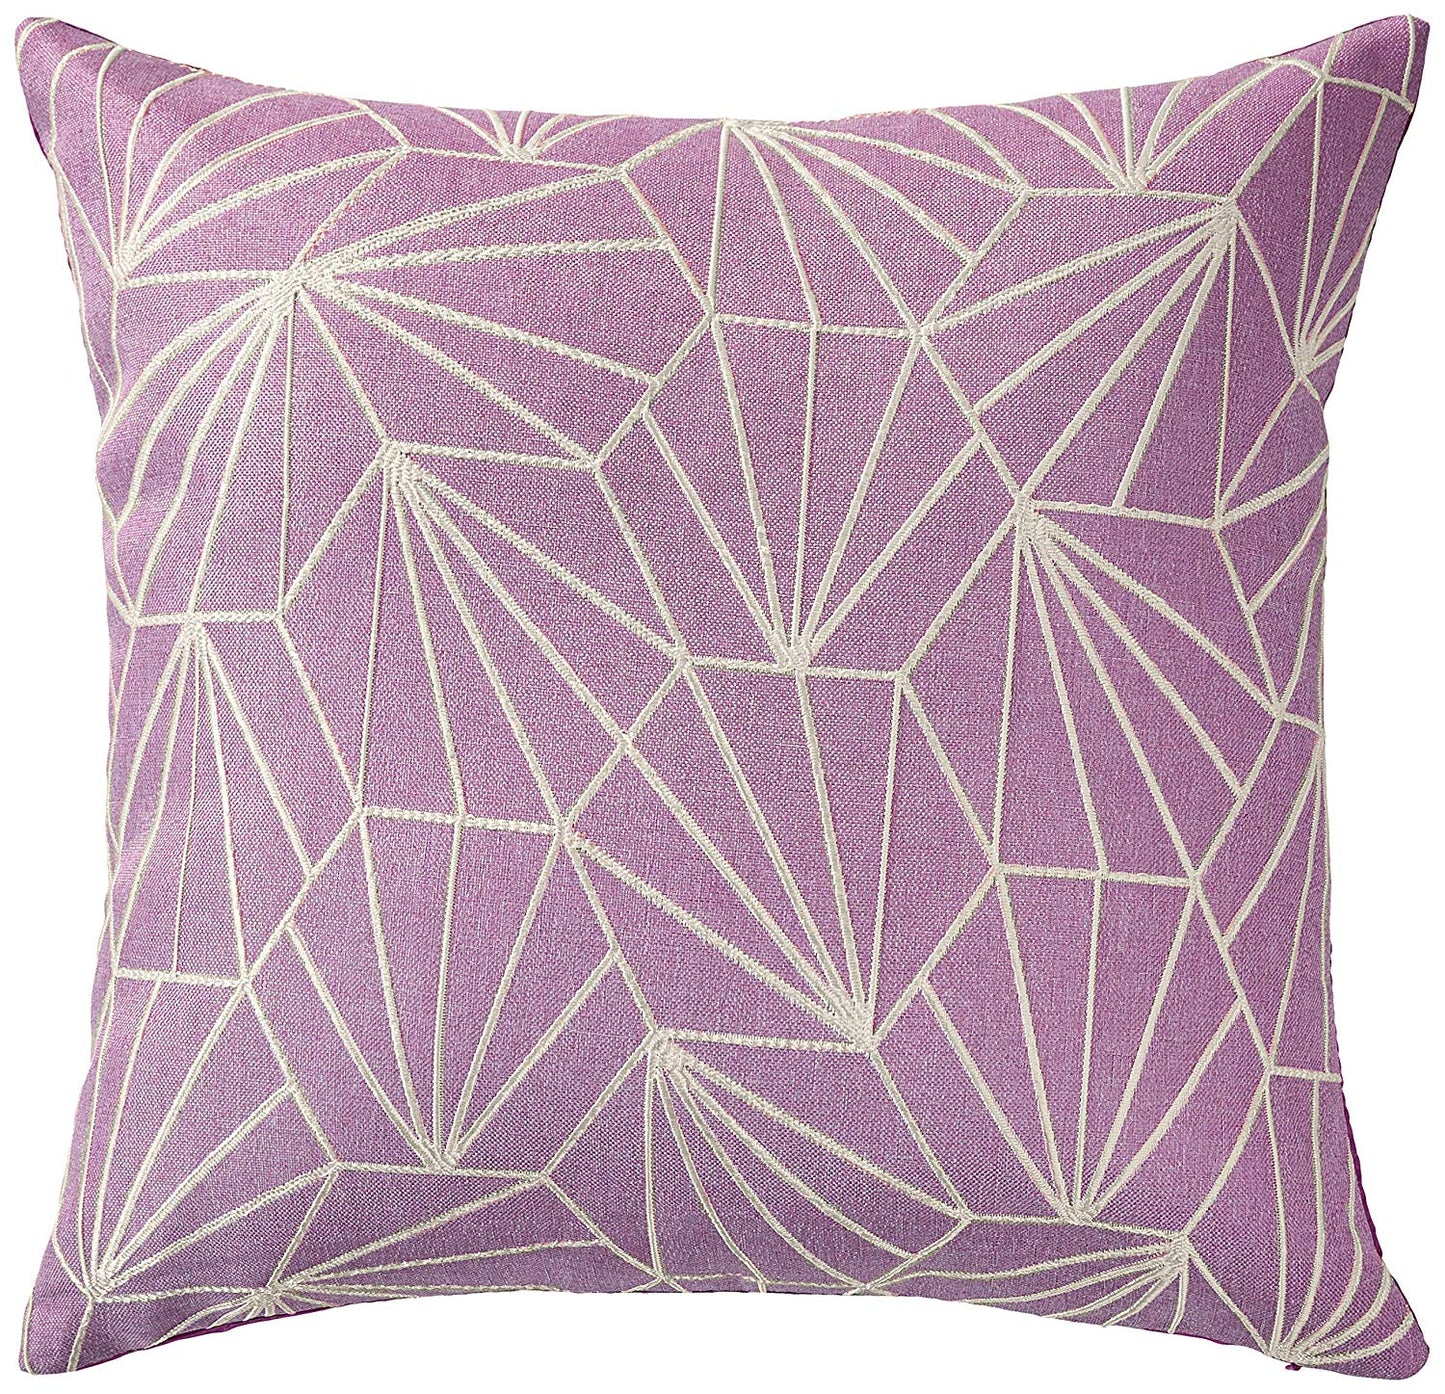 Victoria Chenille Abstract Haxegon Design Decorative Accent Throw Pillow